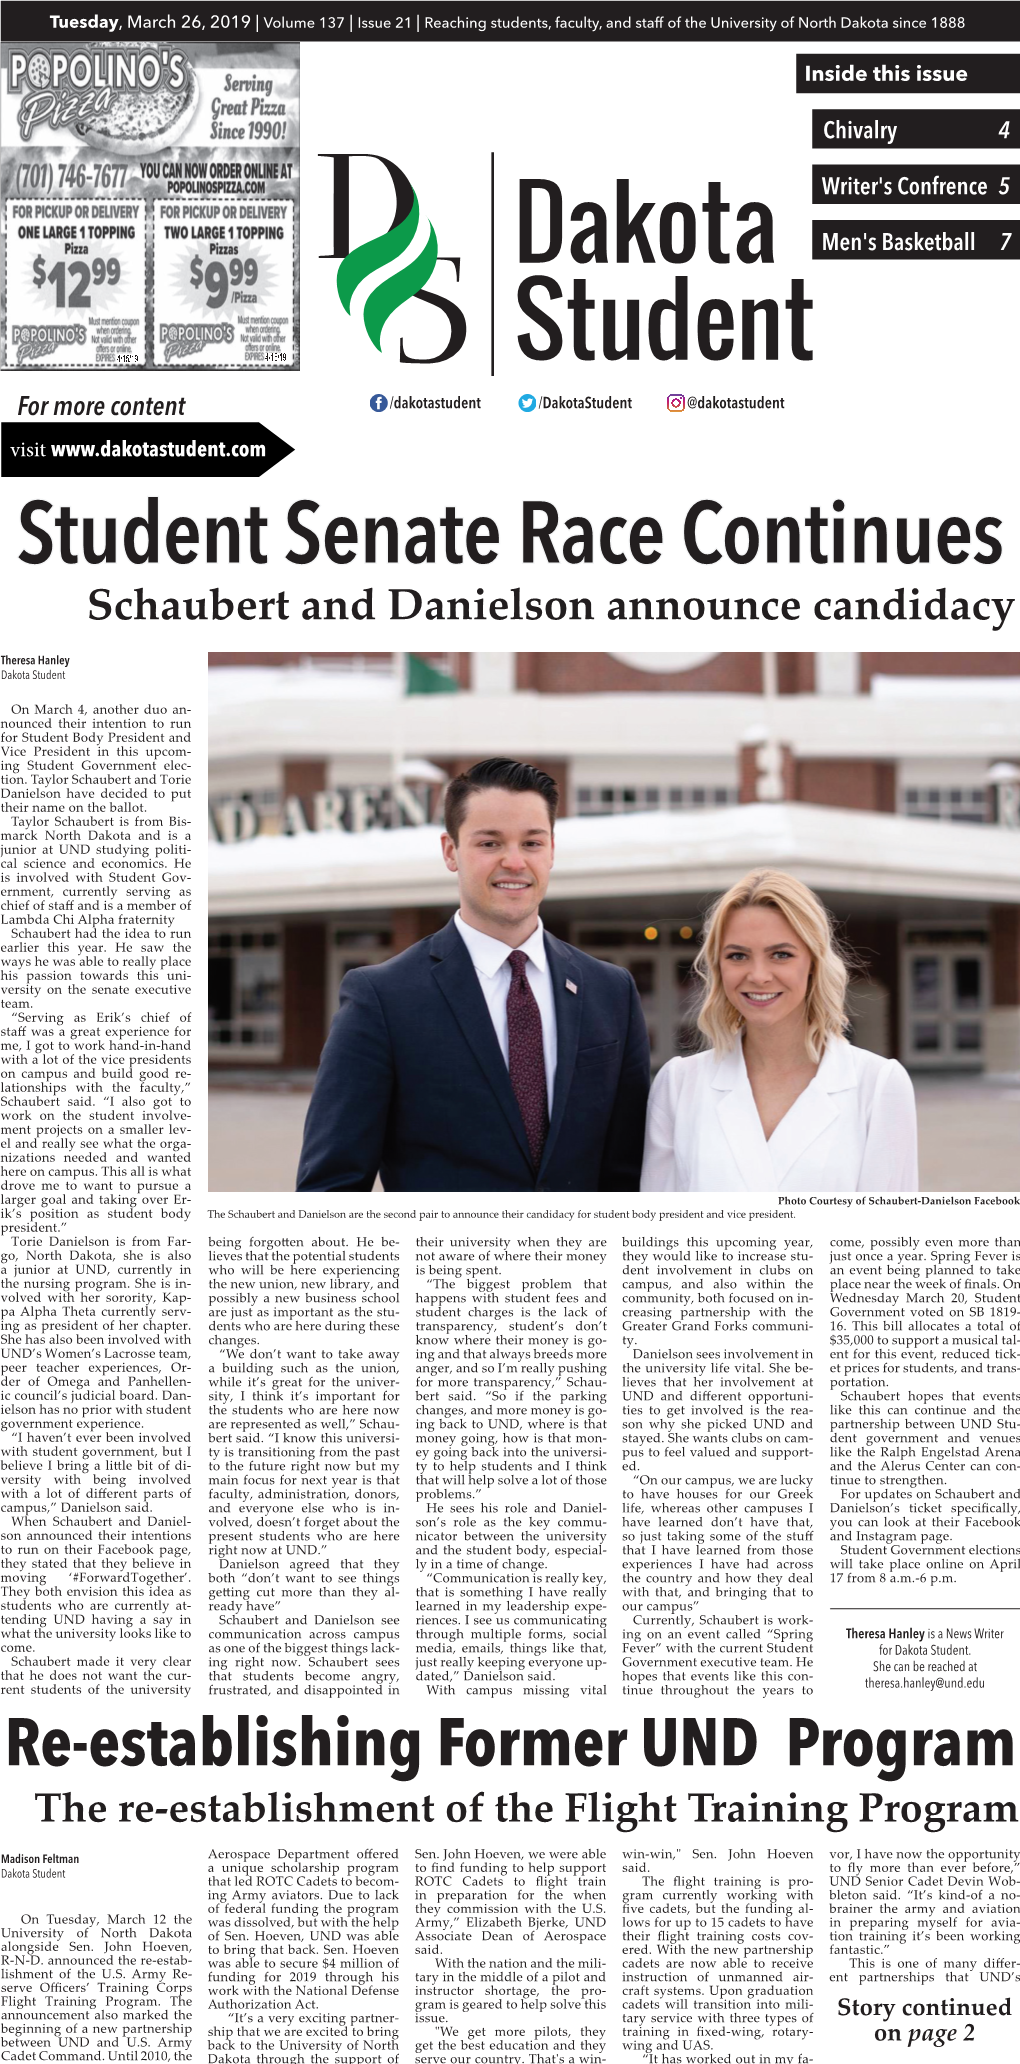 Student Senate Race Continues Schaubert and Danielson Announce Candidacy